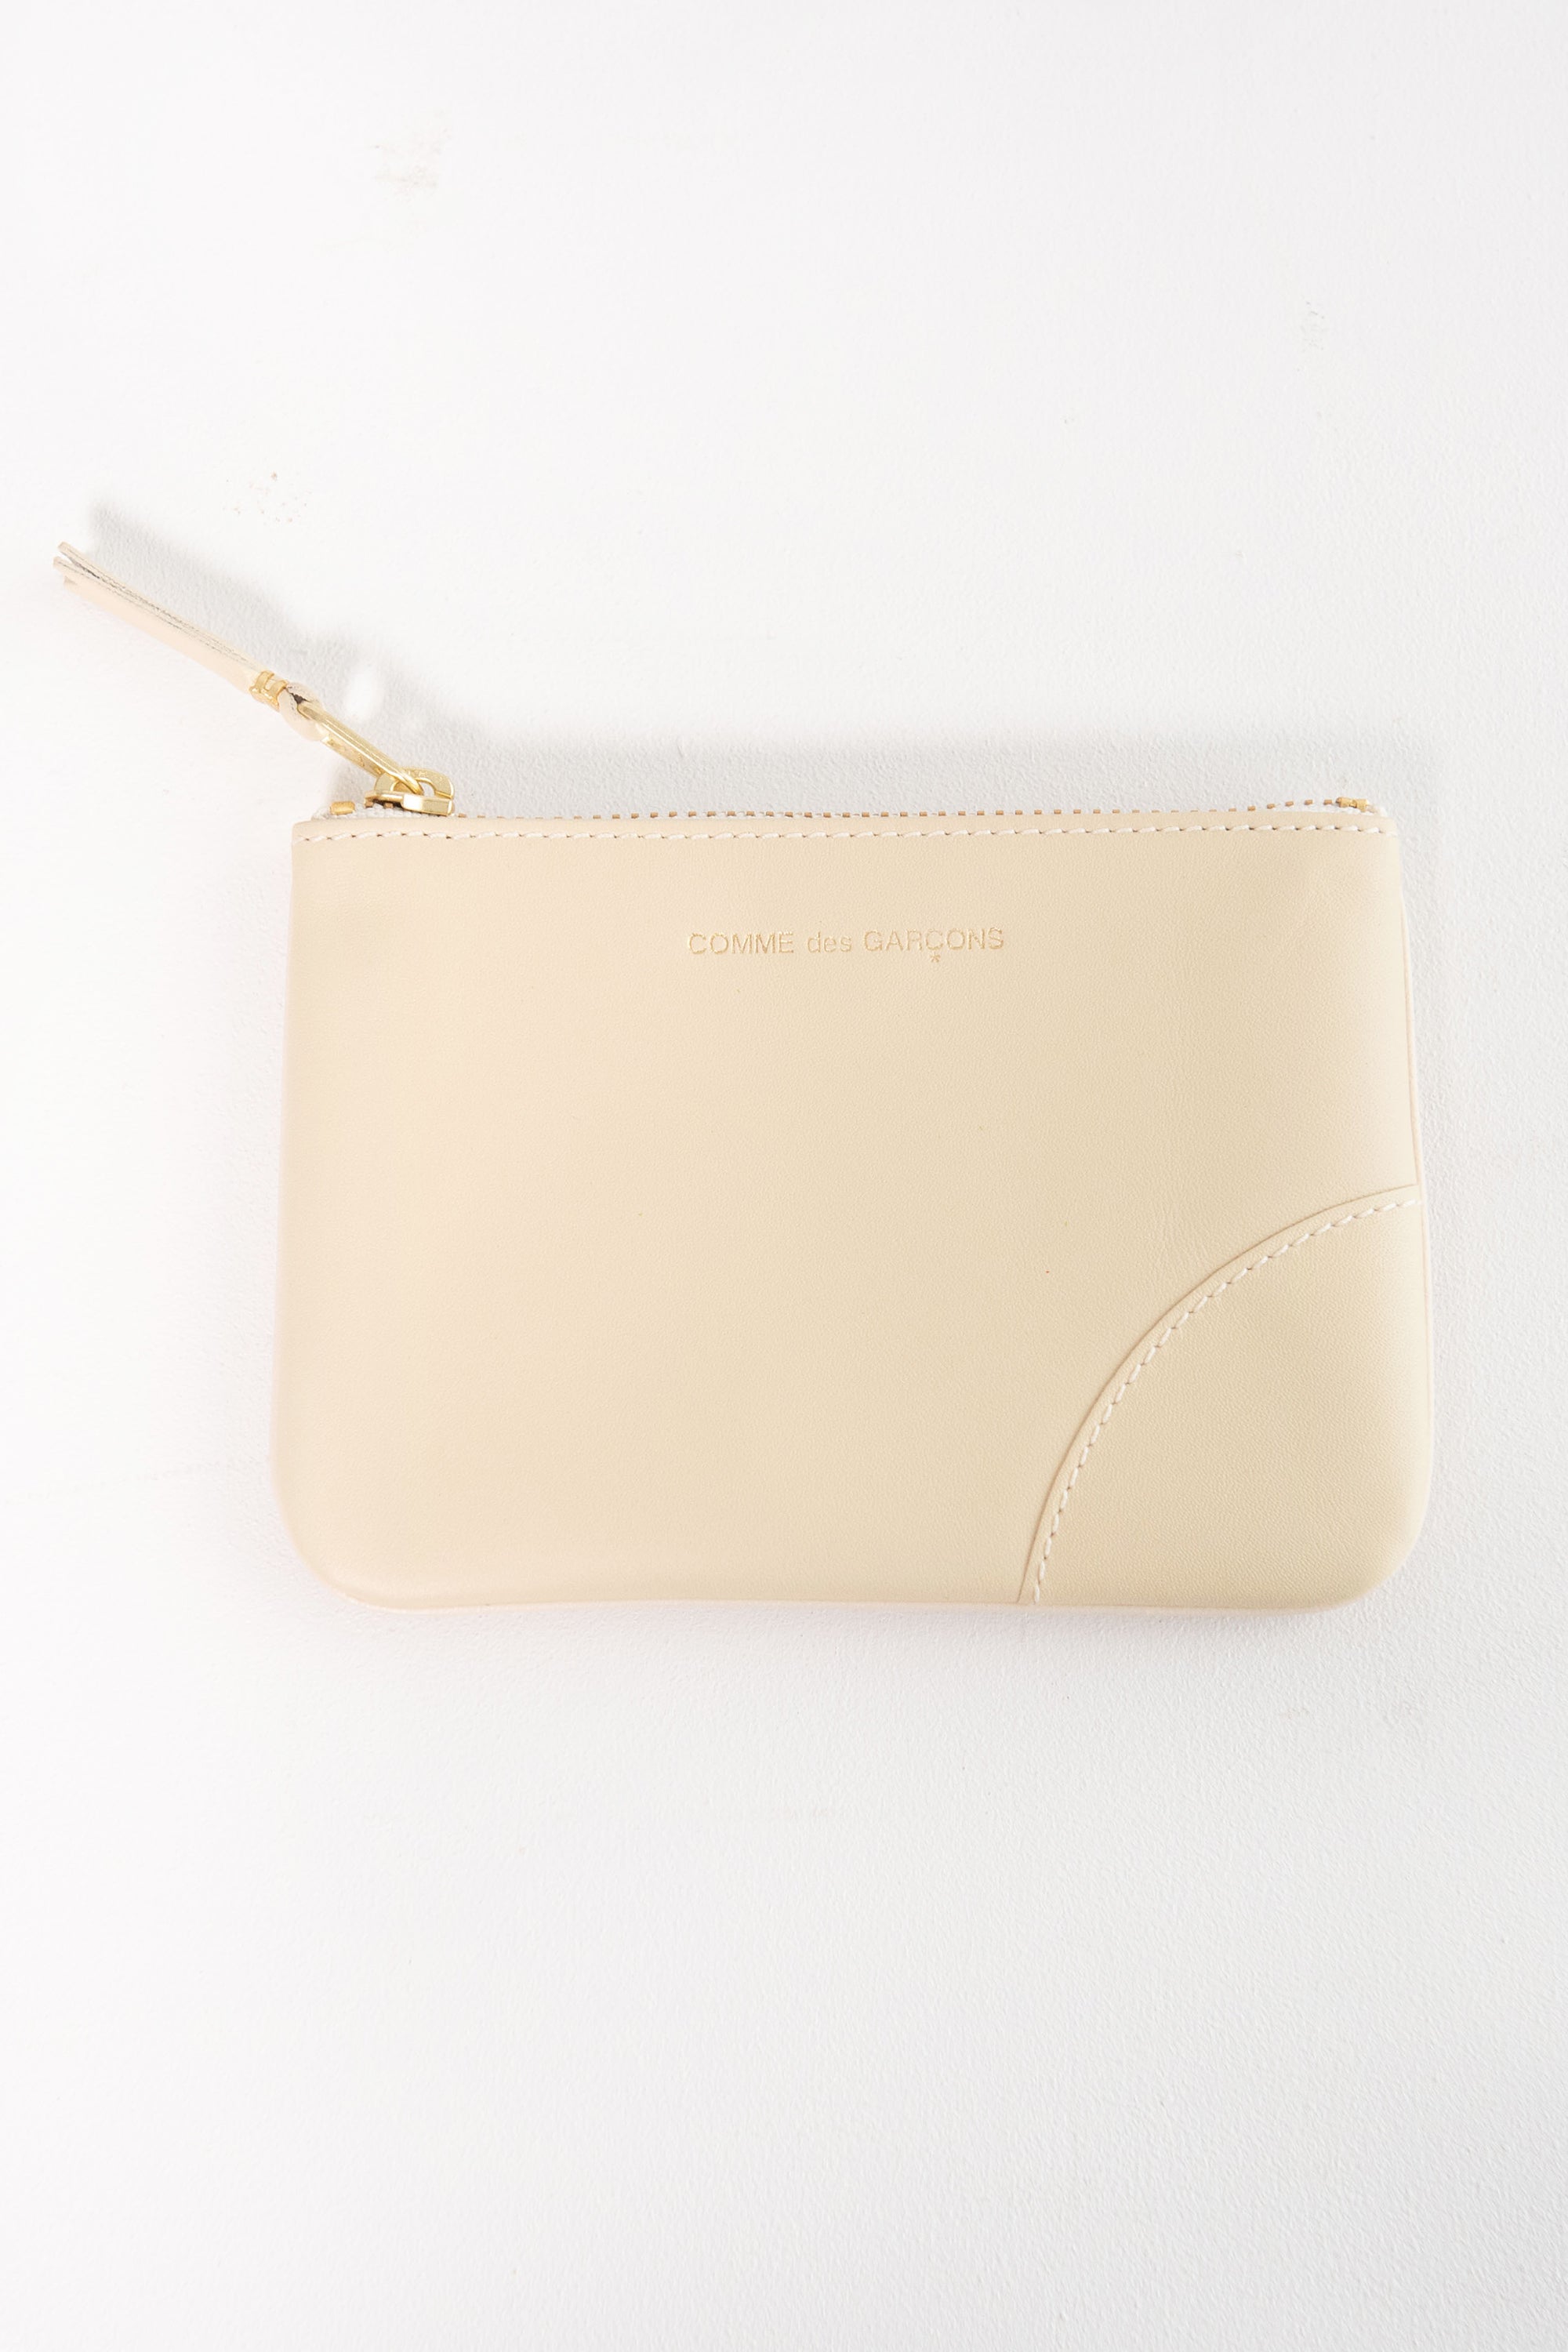 Vintage Cream Leather Purse. Off White Saks Fifth Avenue Handbag. Vint